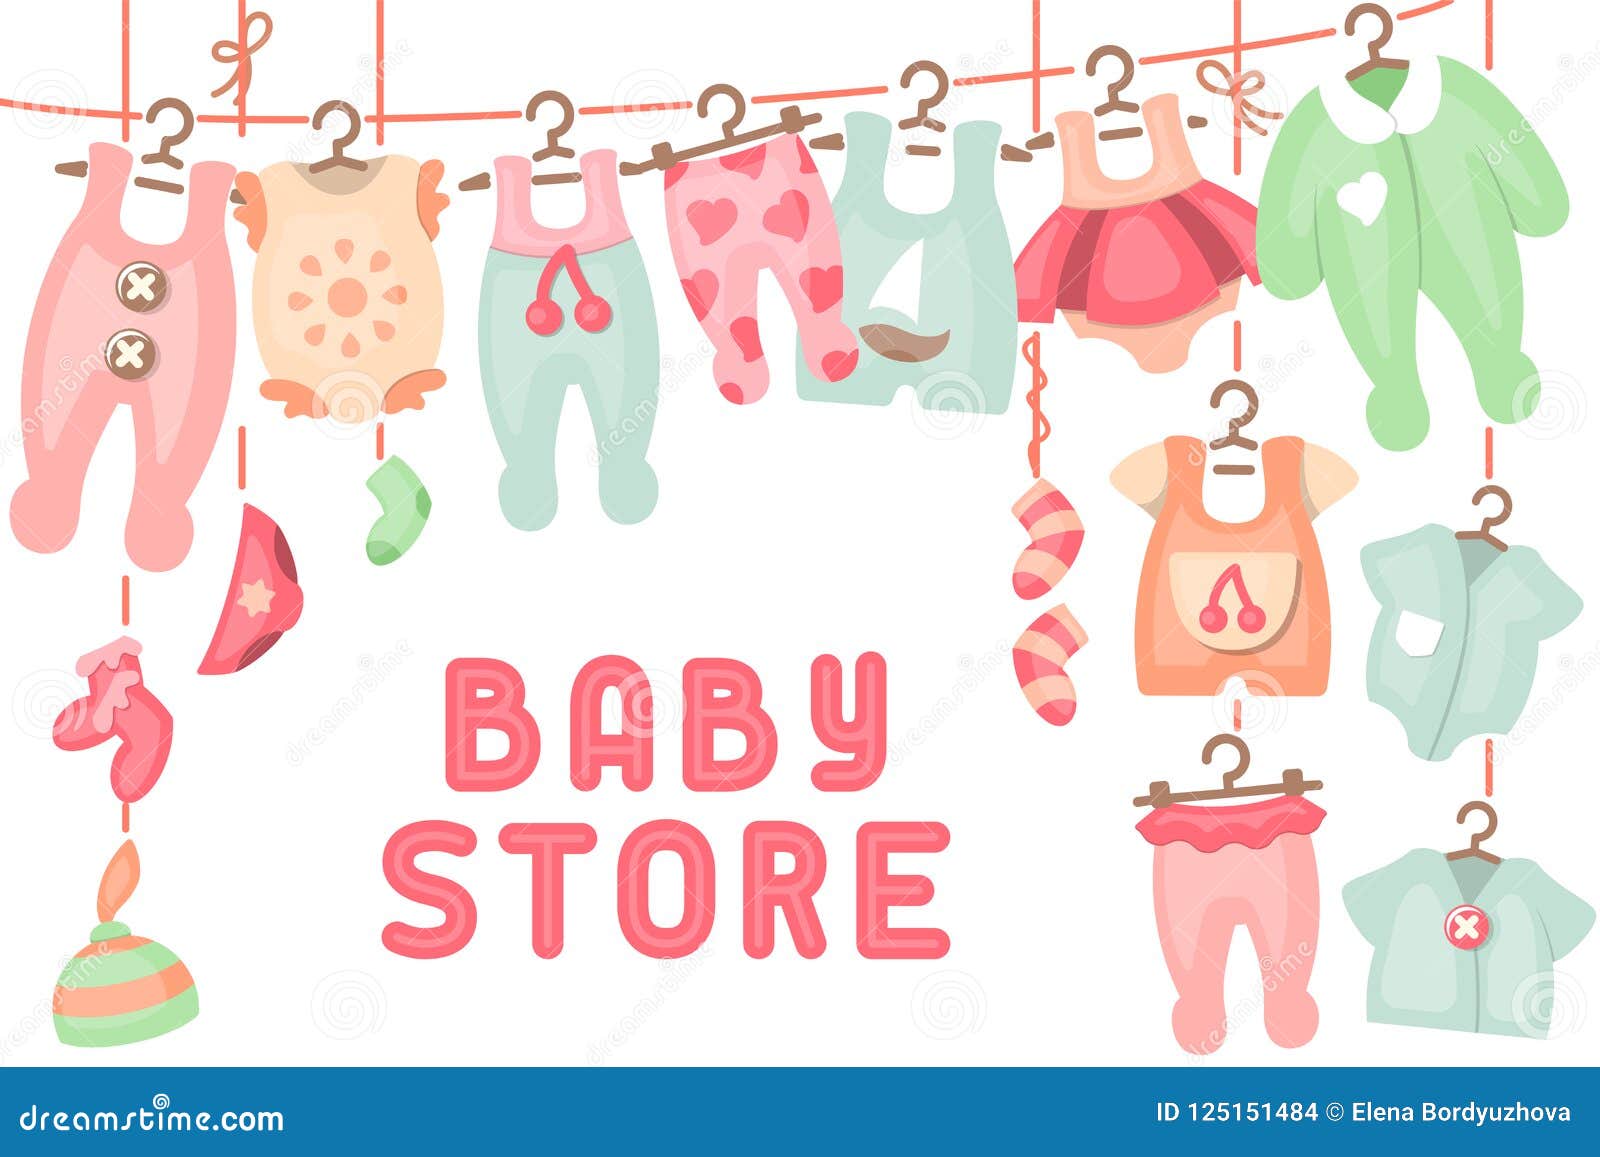 bebe baby store